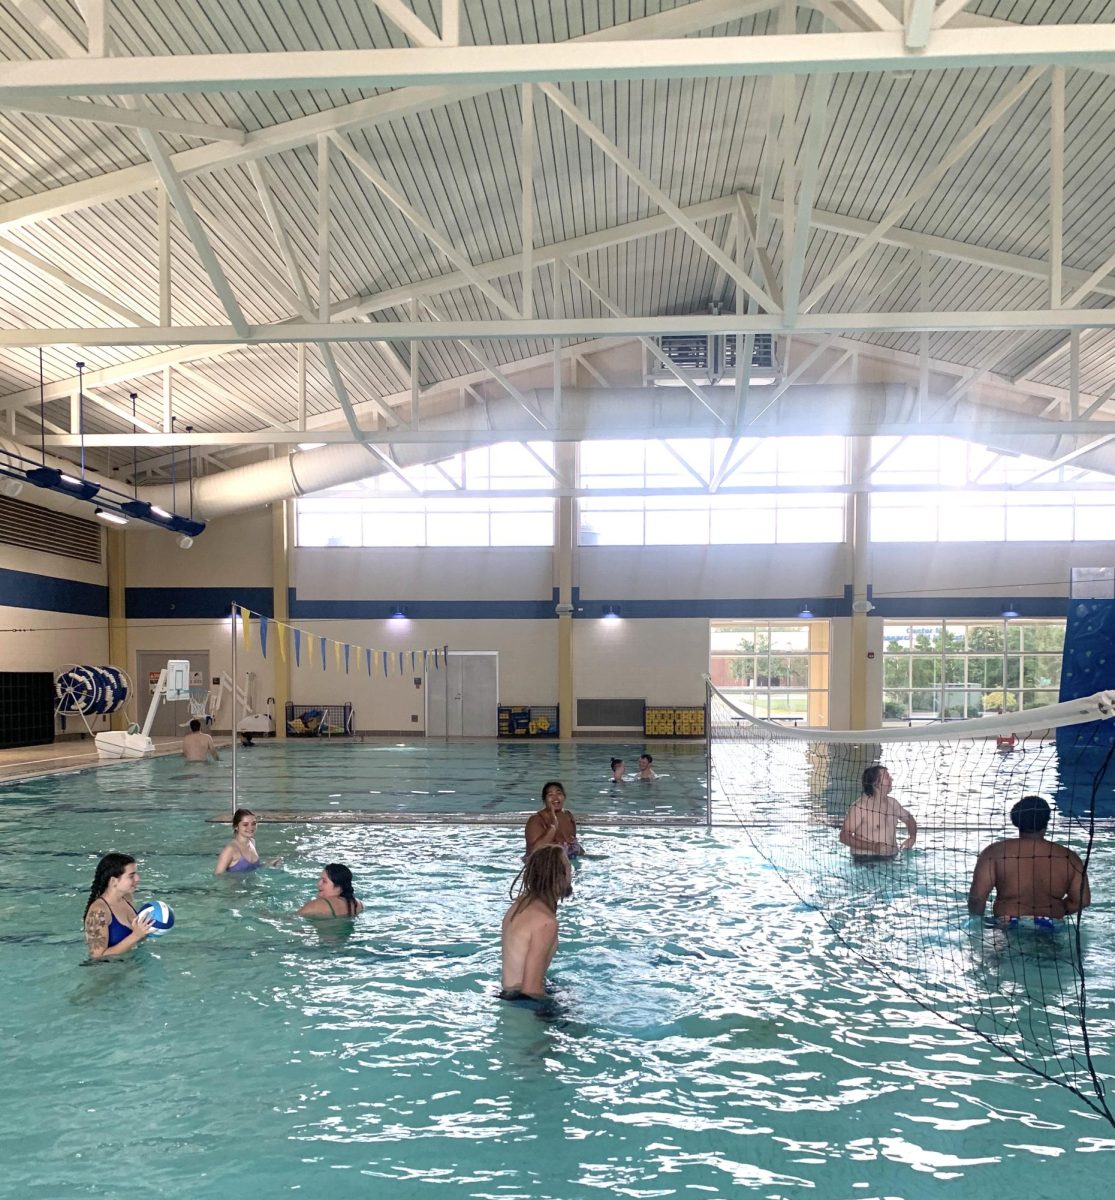 Students+enjoy+a+bit+of+pool+time+as+the+indoor+pool+reopened+last+week+following+repairs.